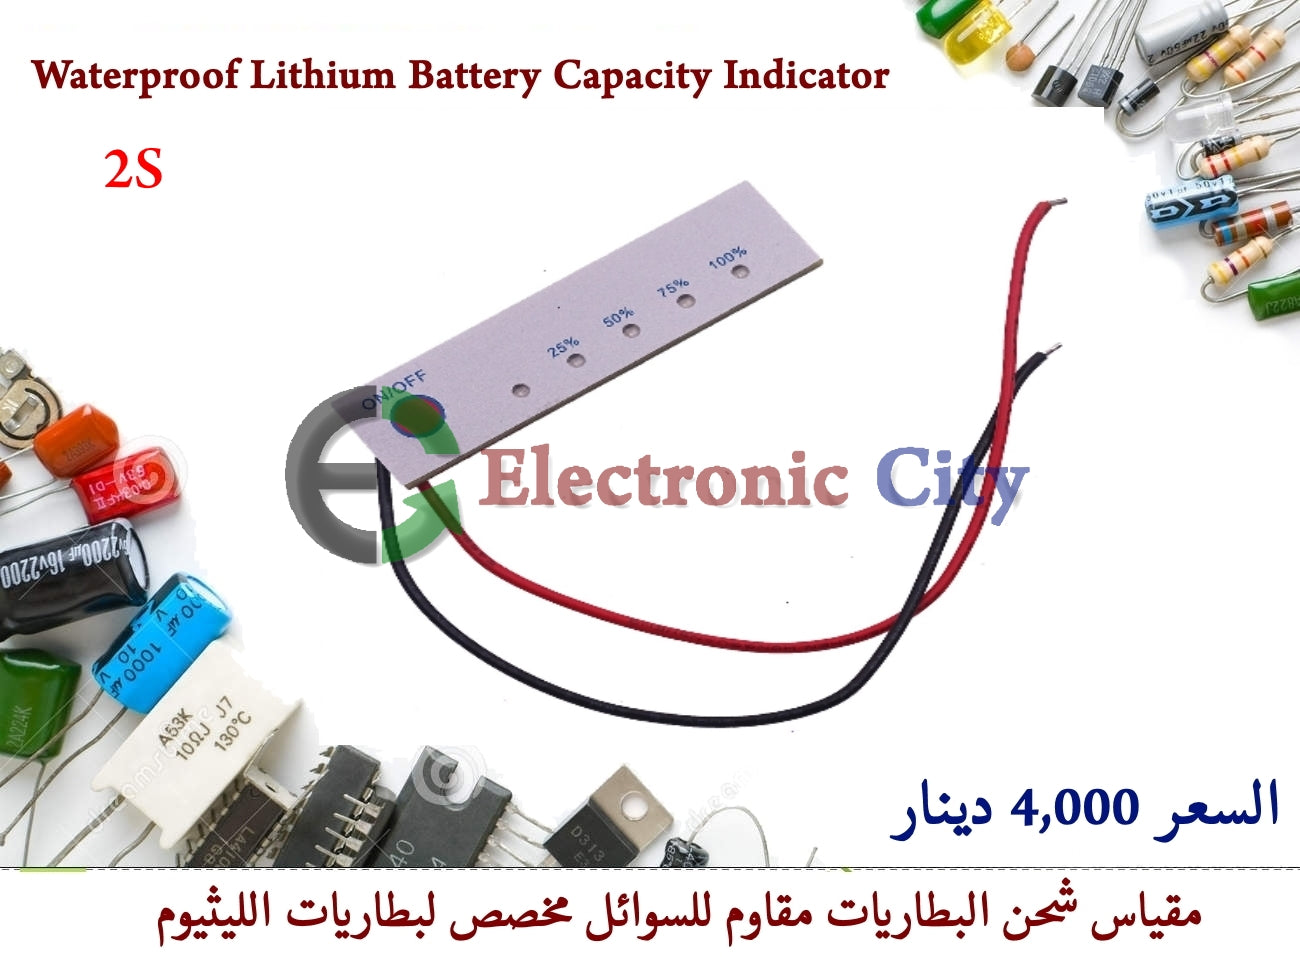 Waterproof Lithium Battery Capacity Indicator 2S #F3 011133